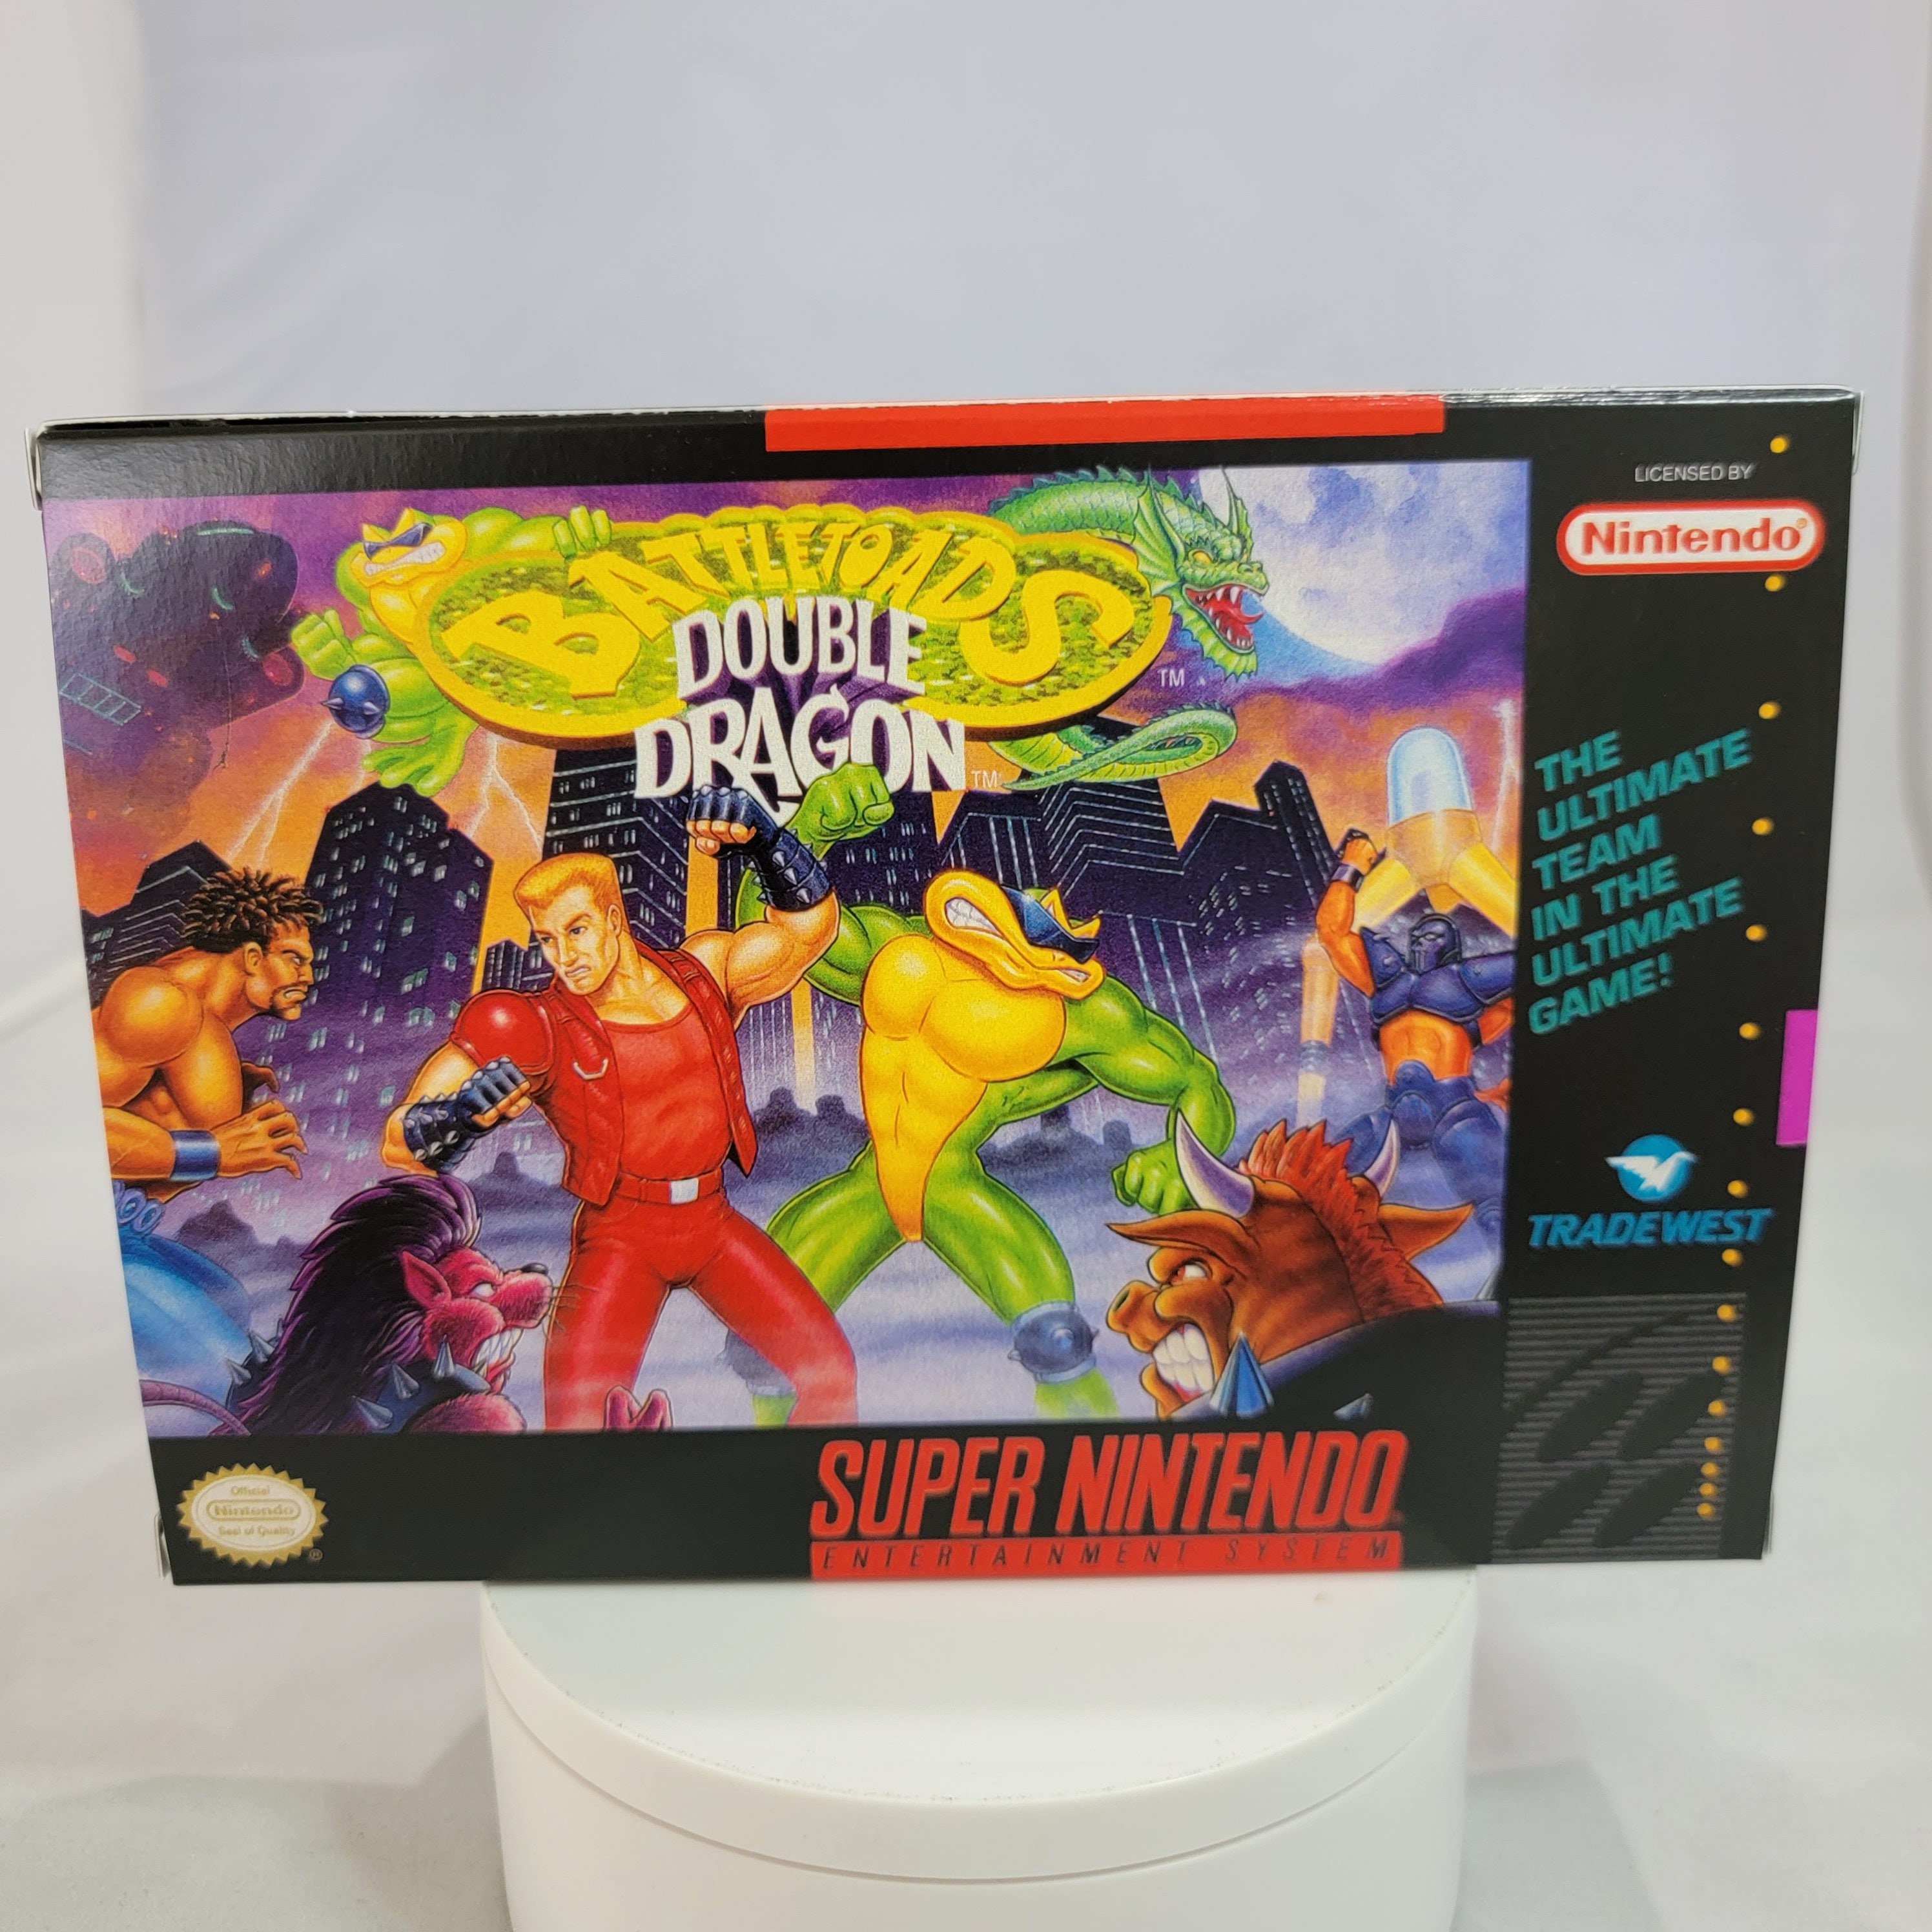  Super Double Dragon (Super Nintendo, SNES) Reproduction Video  Game Cartridge : Video Games